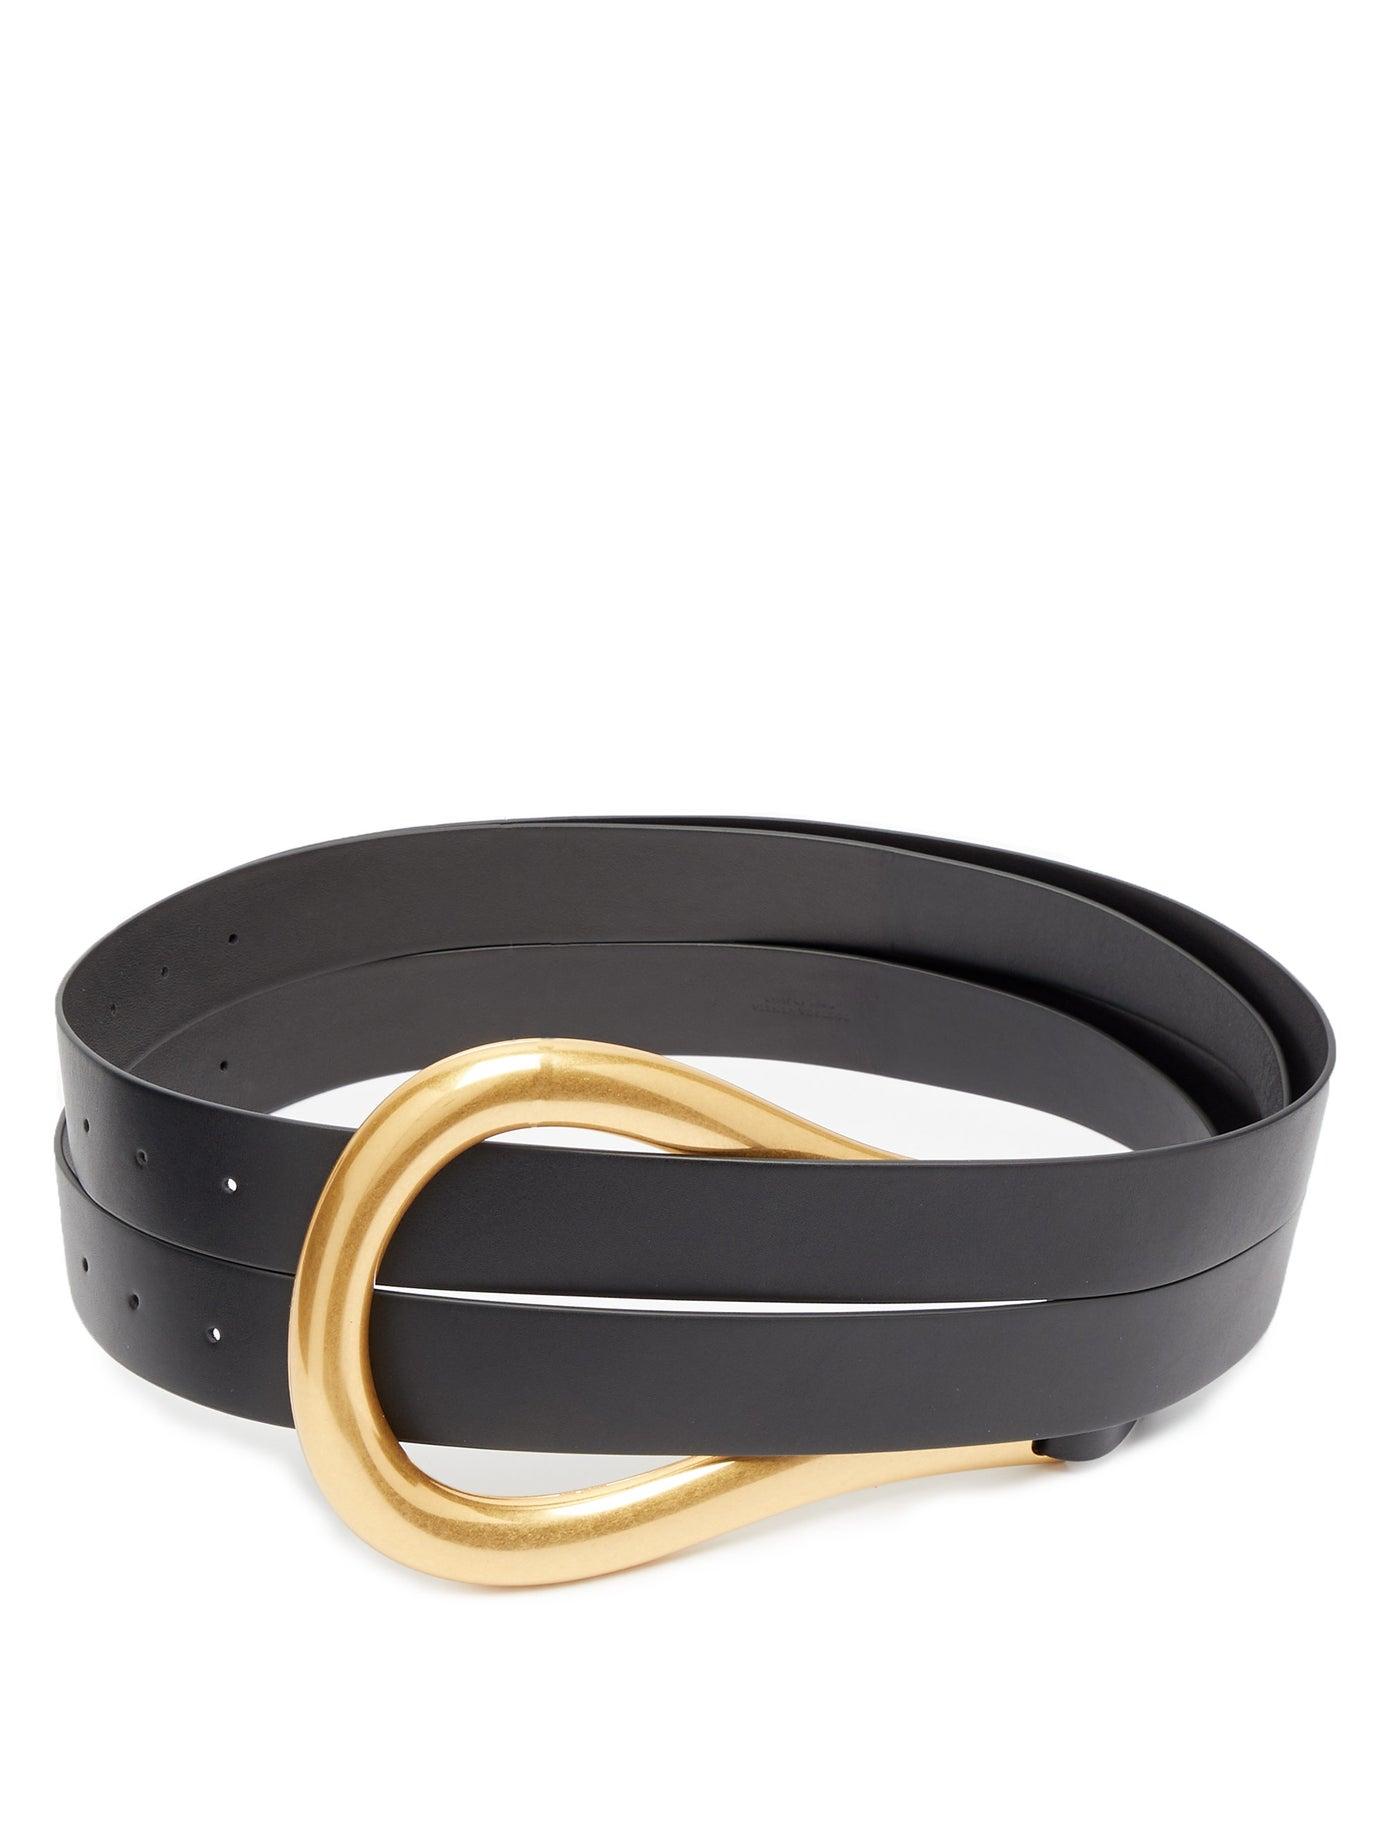 Bottega Veneta Large Curved Loop Leather Belt in Black - Lyst